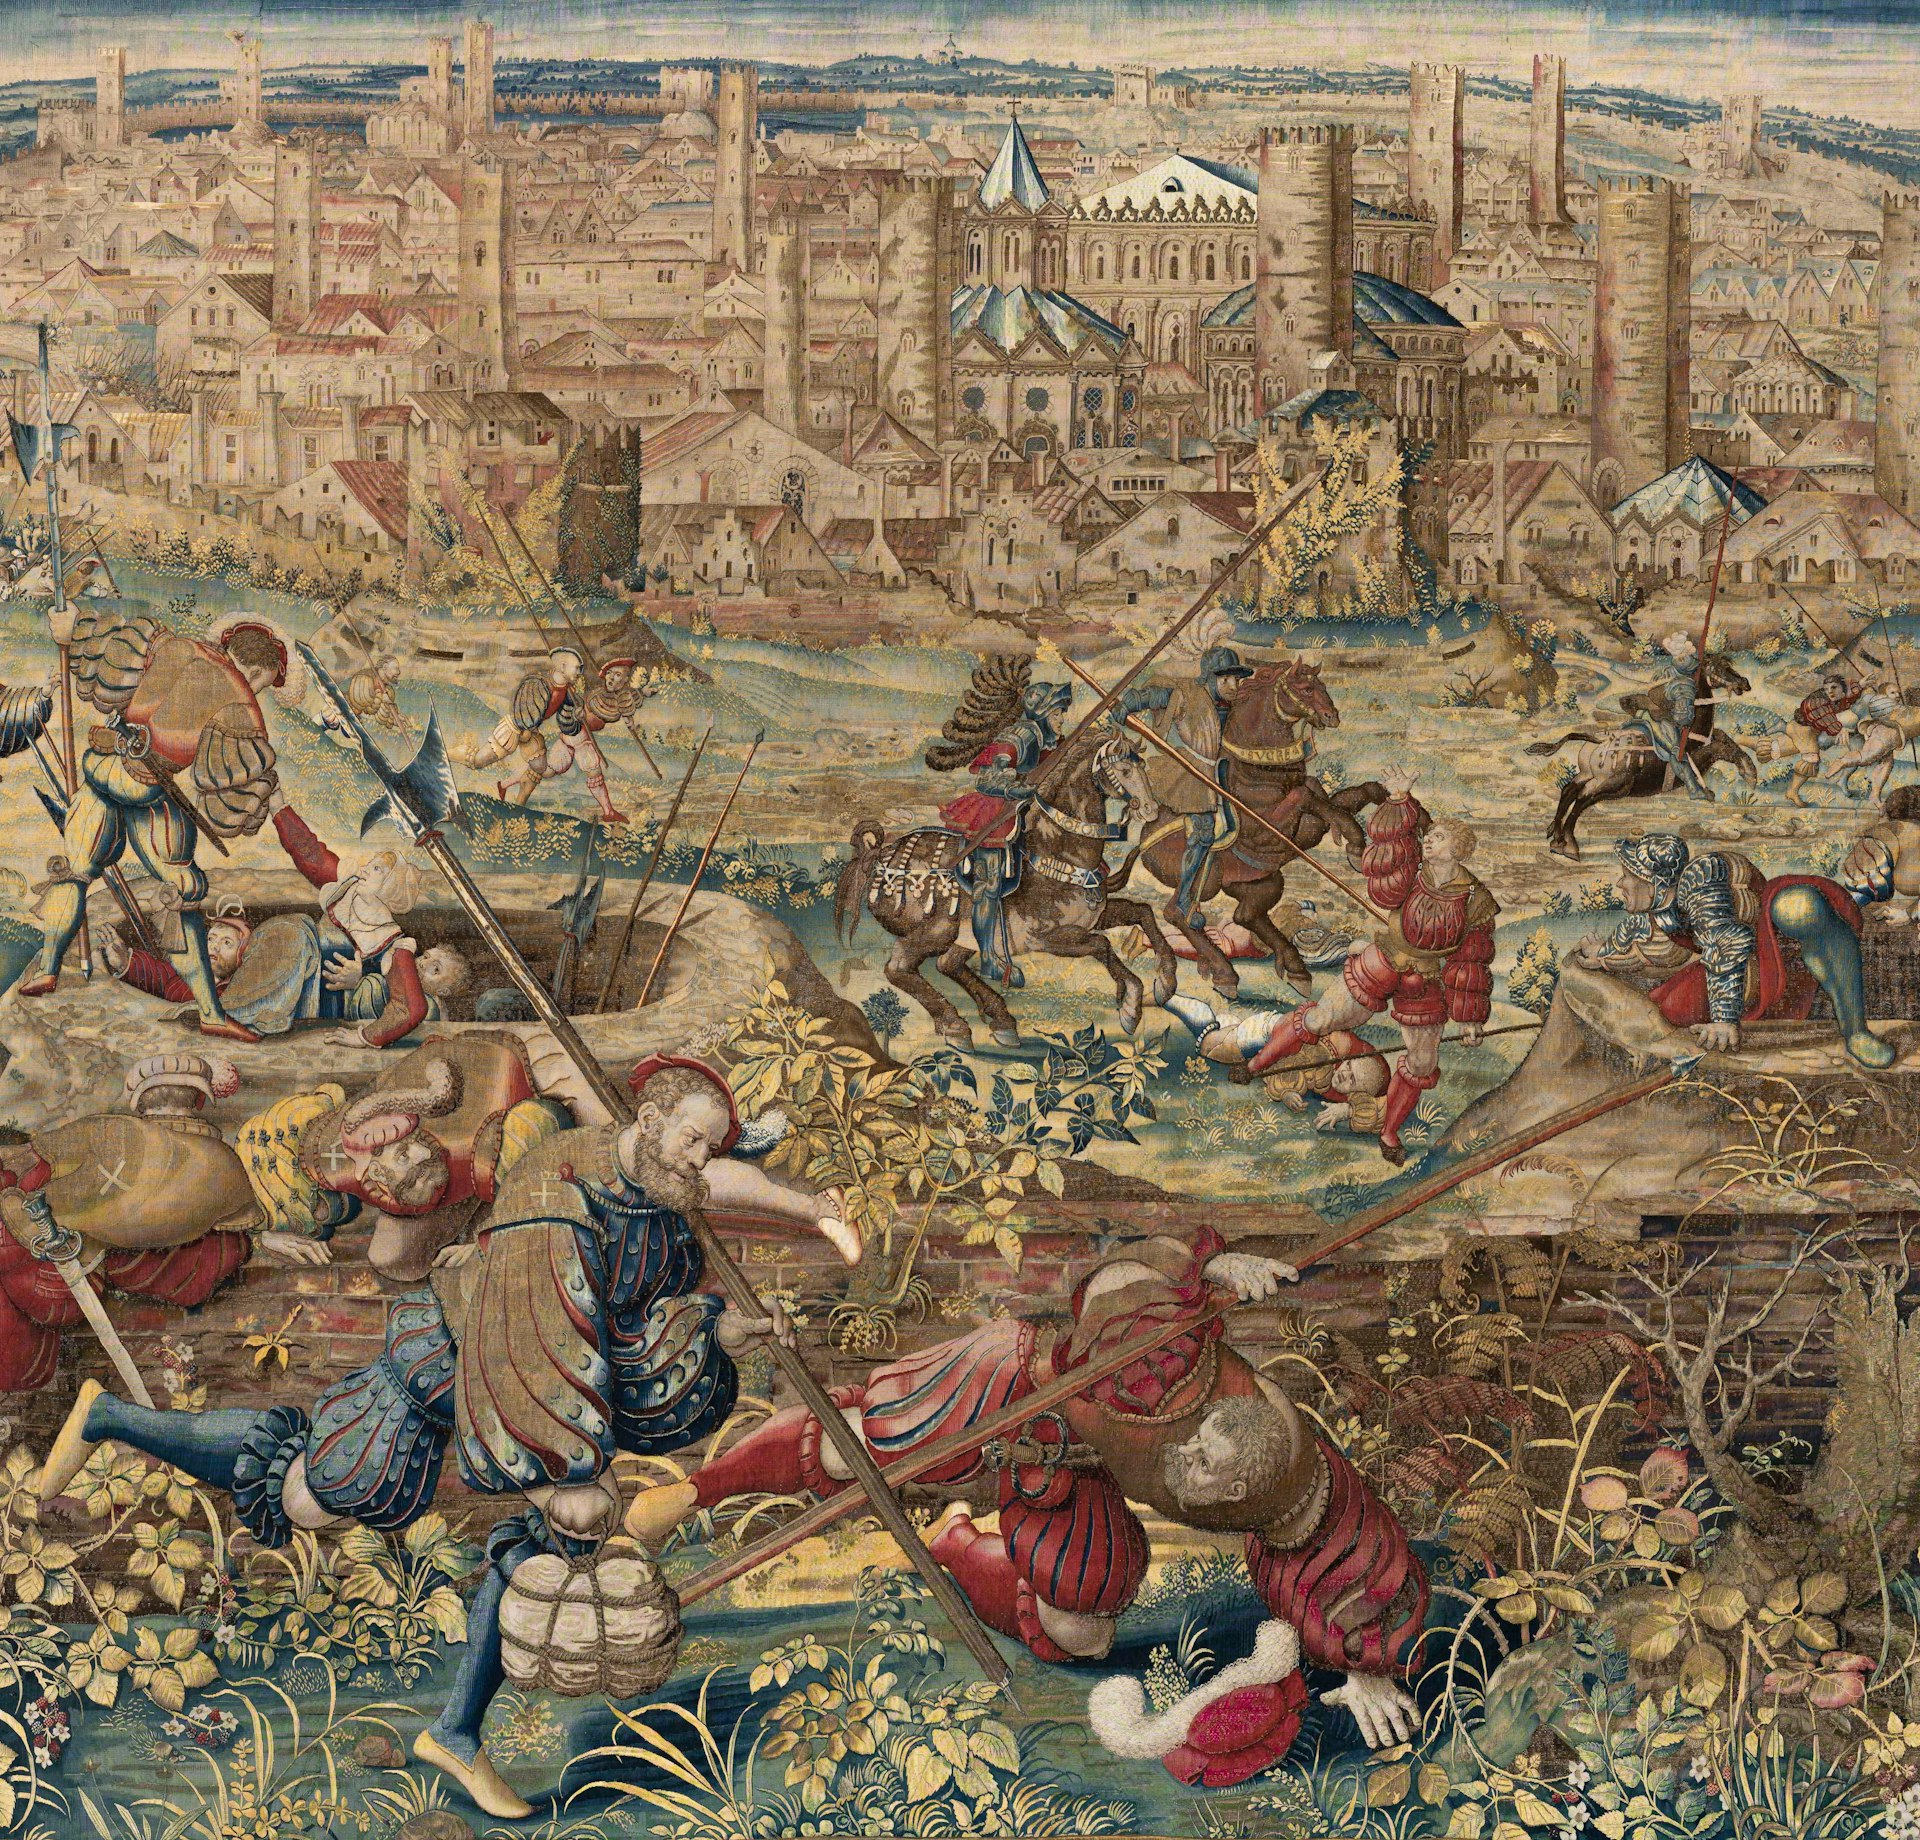 A battle scene depicted in a Renaissance-era tapestry